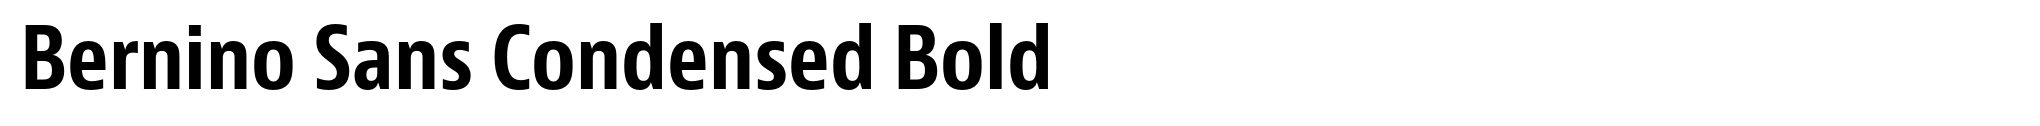 Bernino Sans Condensed Bold image